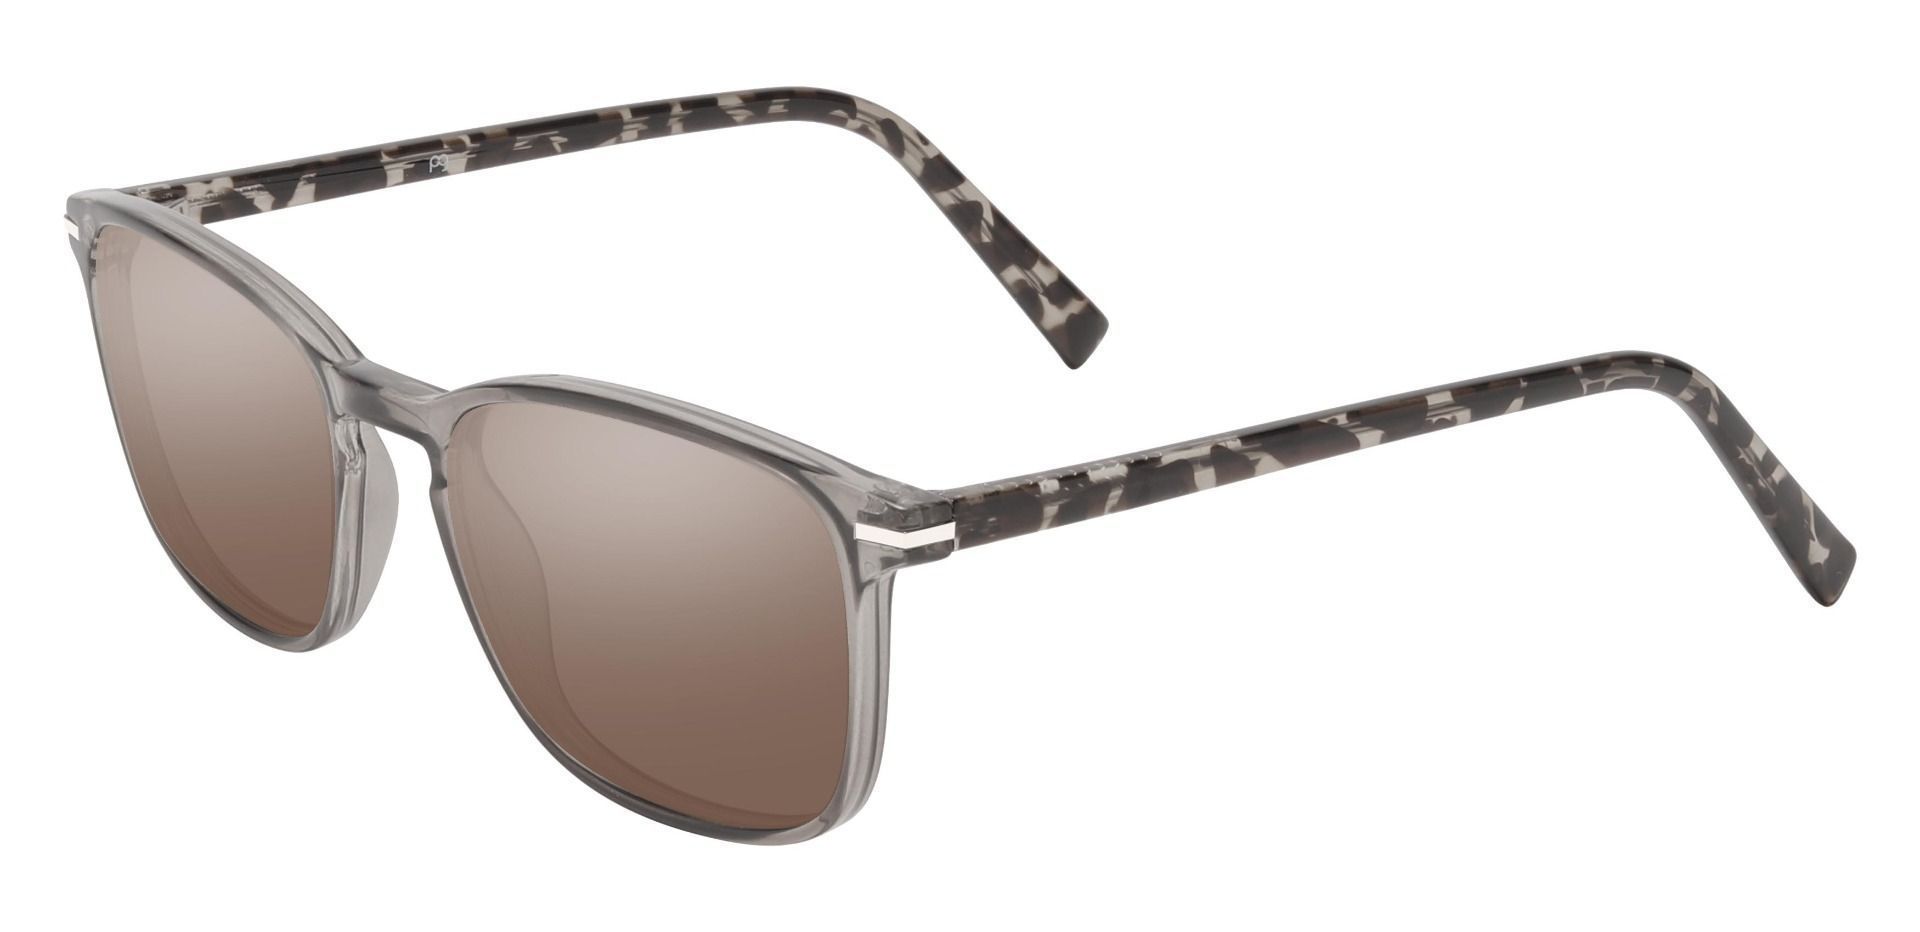 Dumont Rectangle Progressive Sunglasses - Gray Frame With Brown Lenses